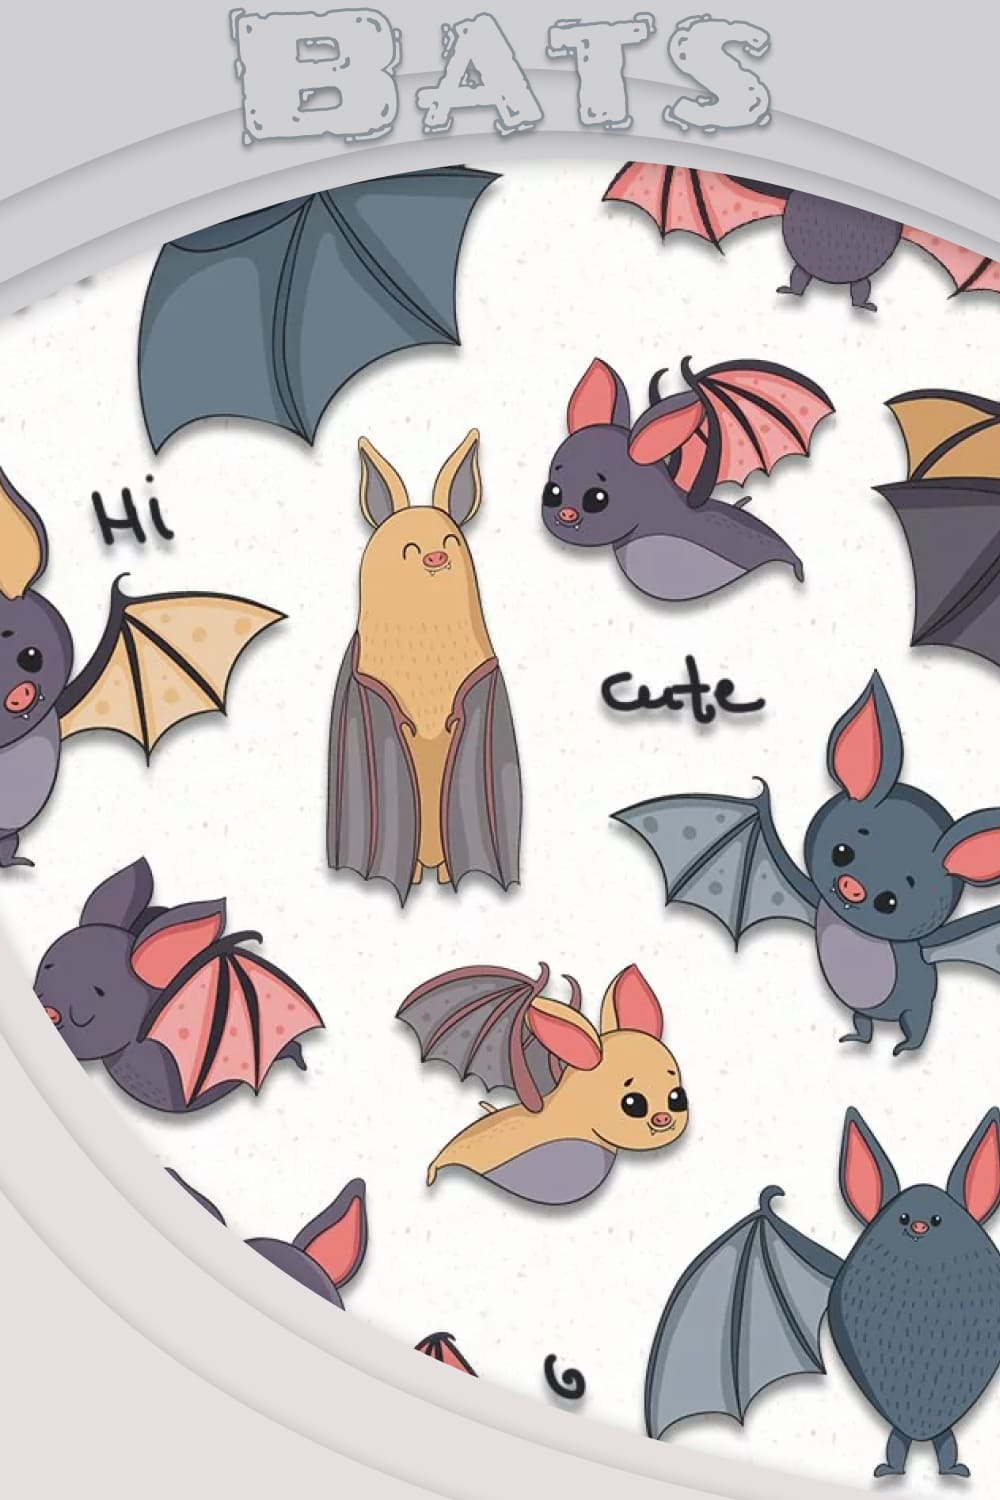 Bats Designs pinterest image.